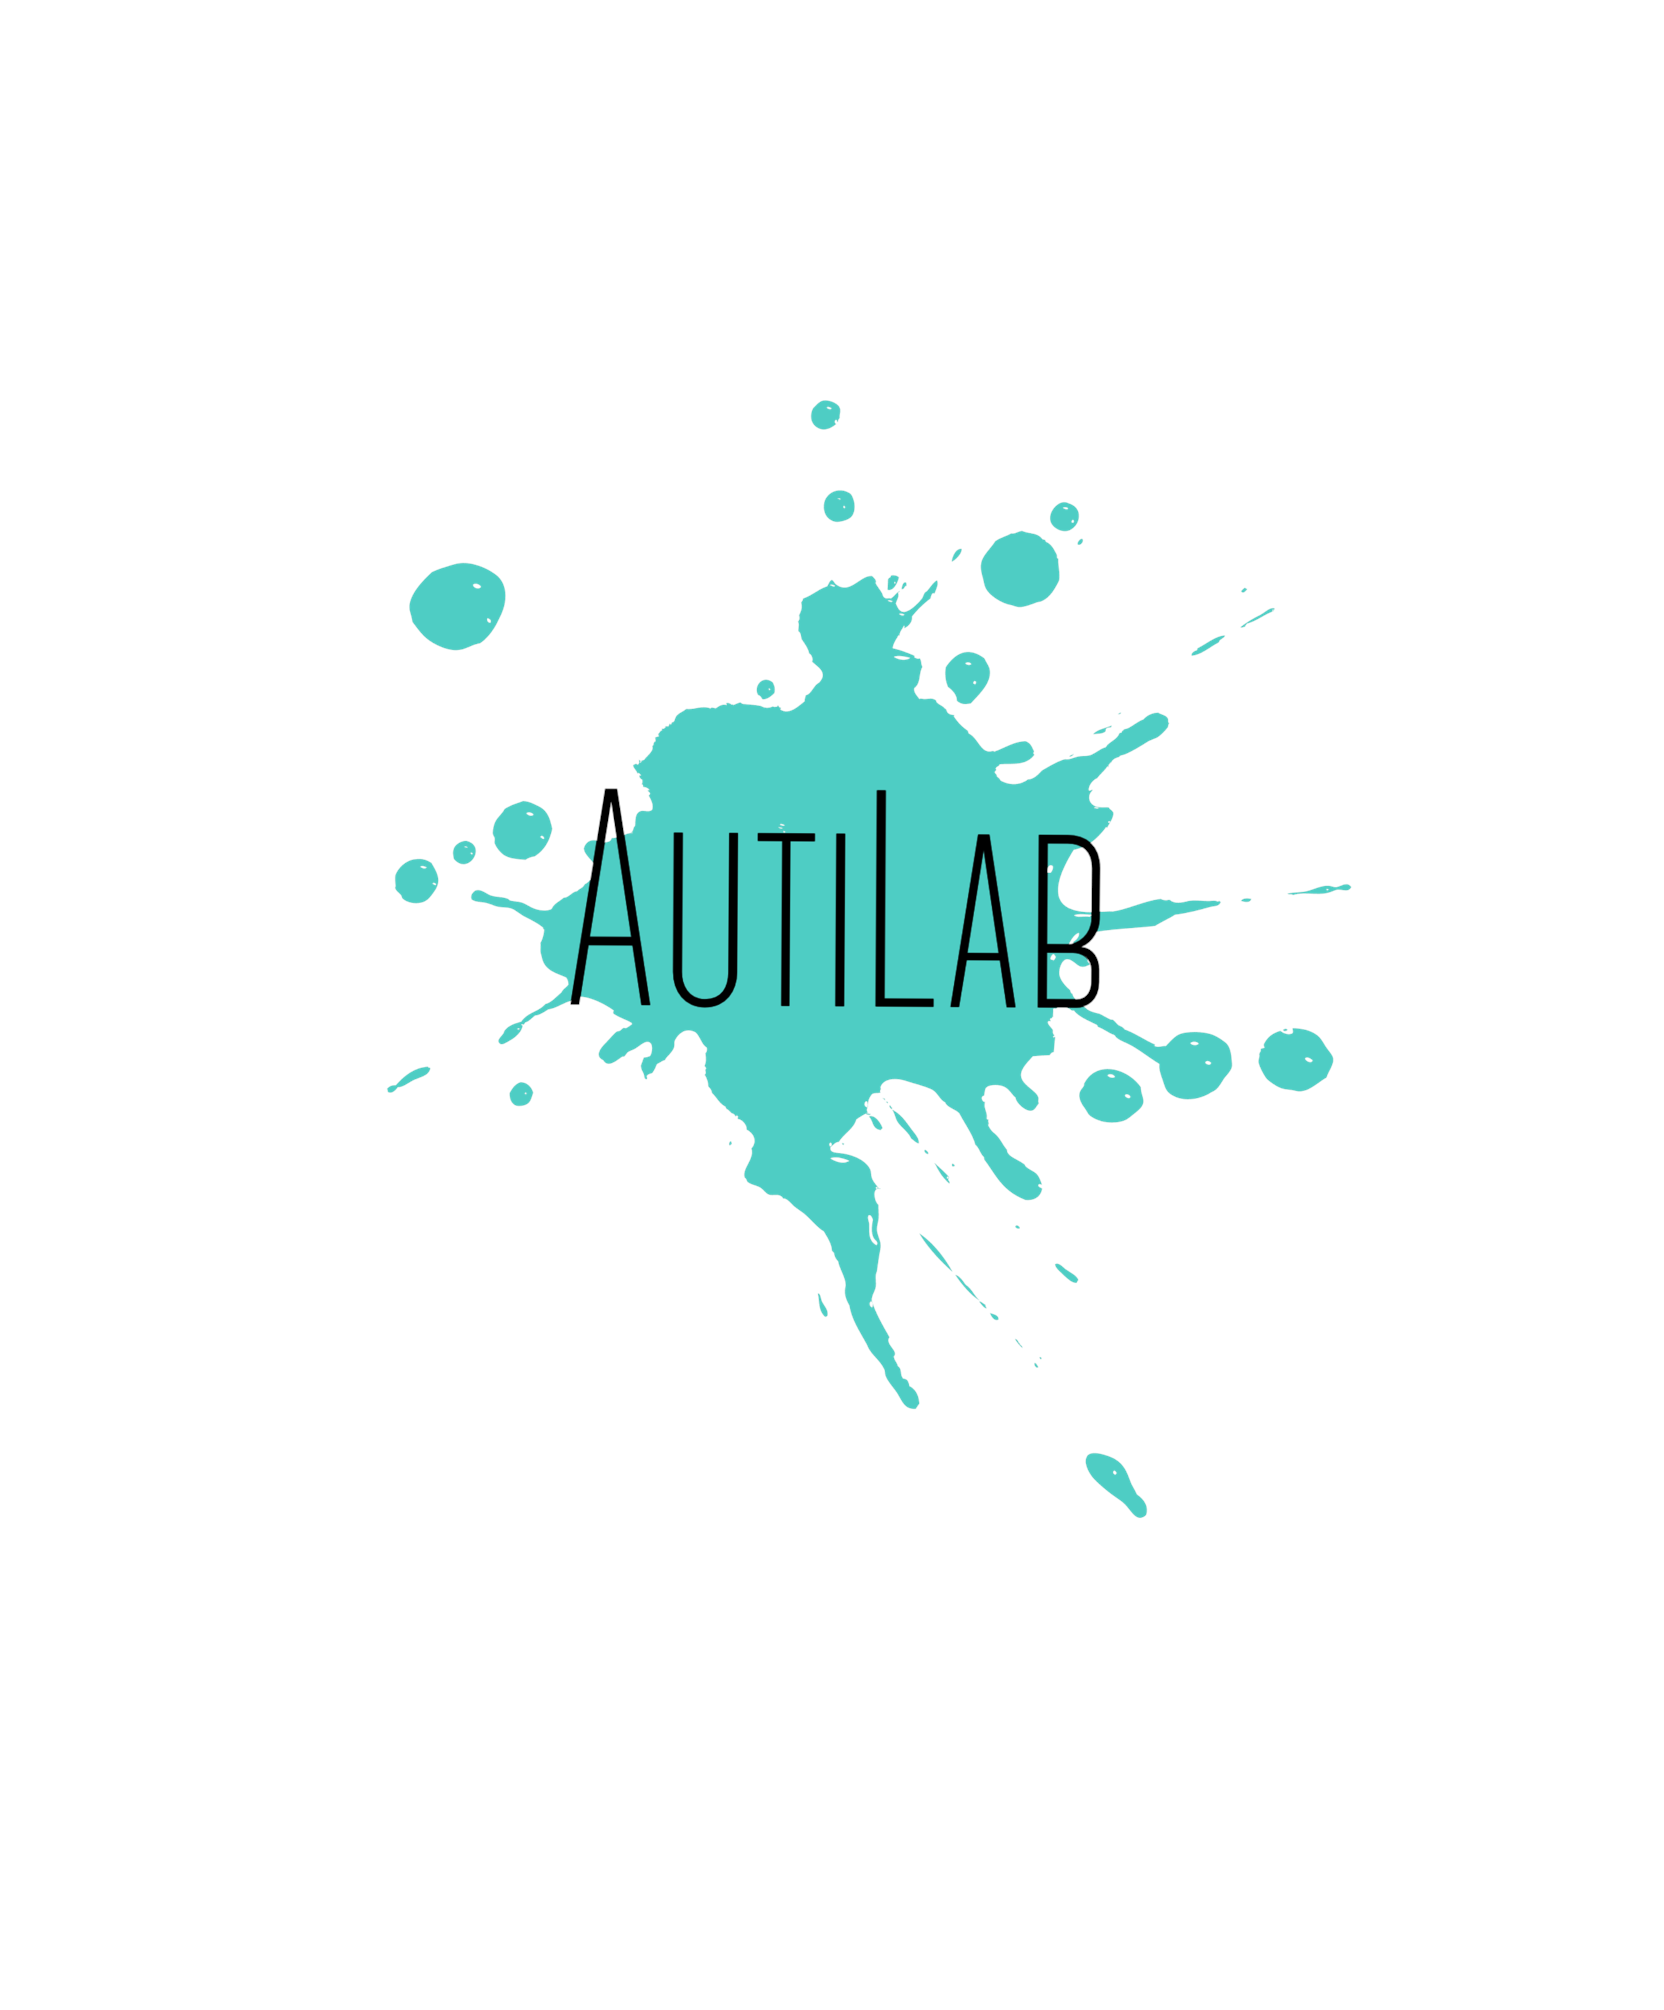 Autilab_Handmade